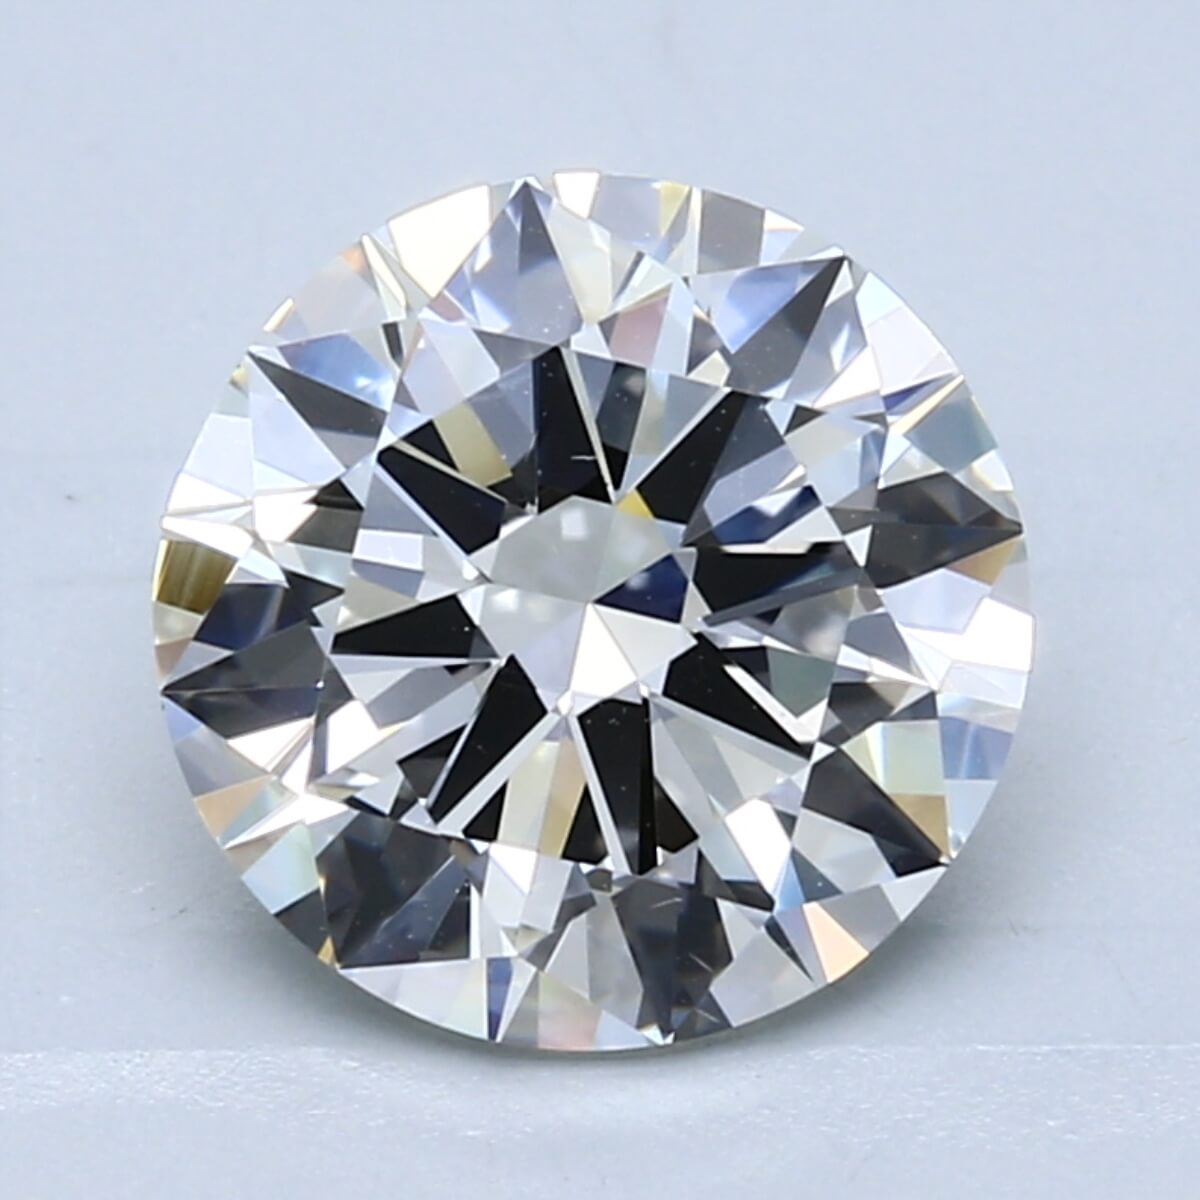 3 carat diamonds